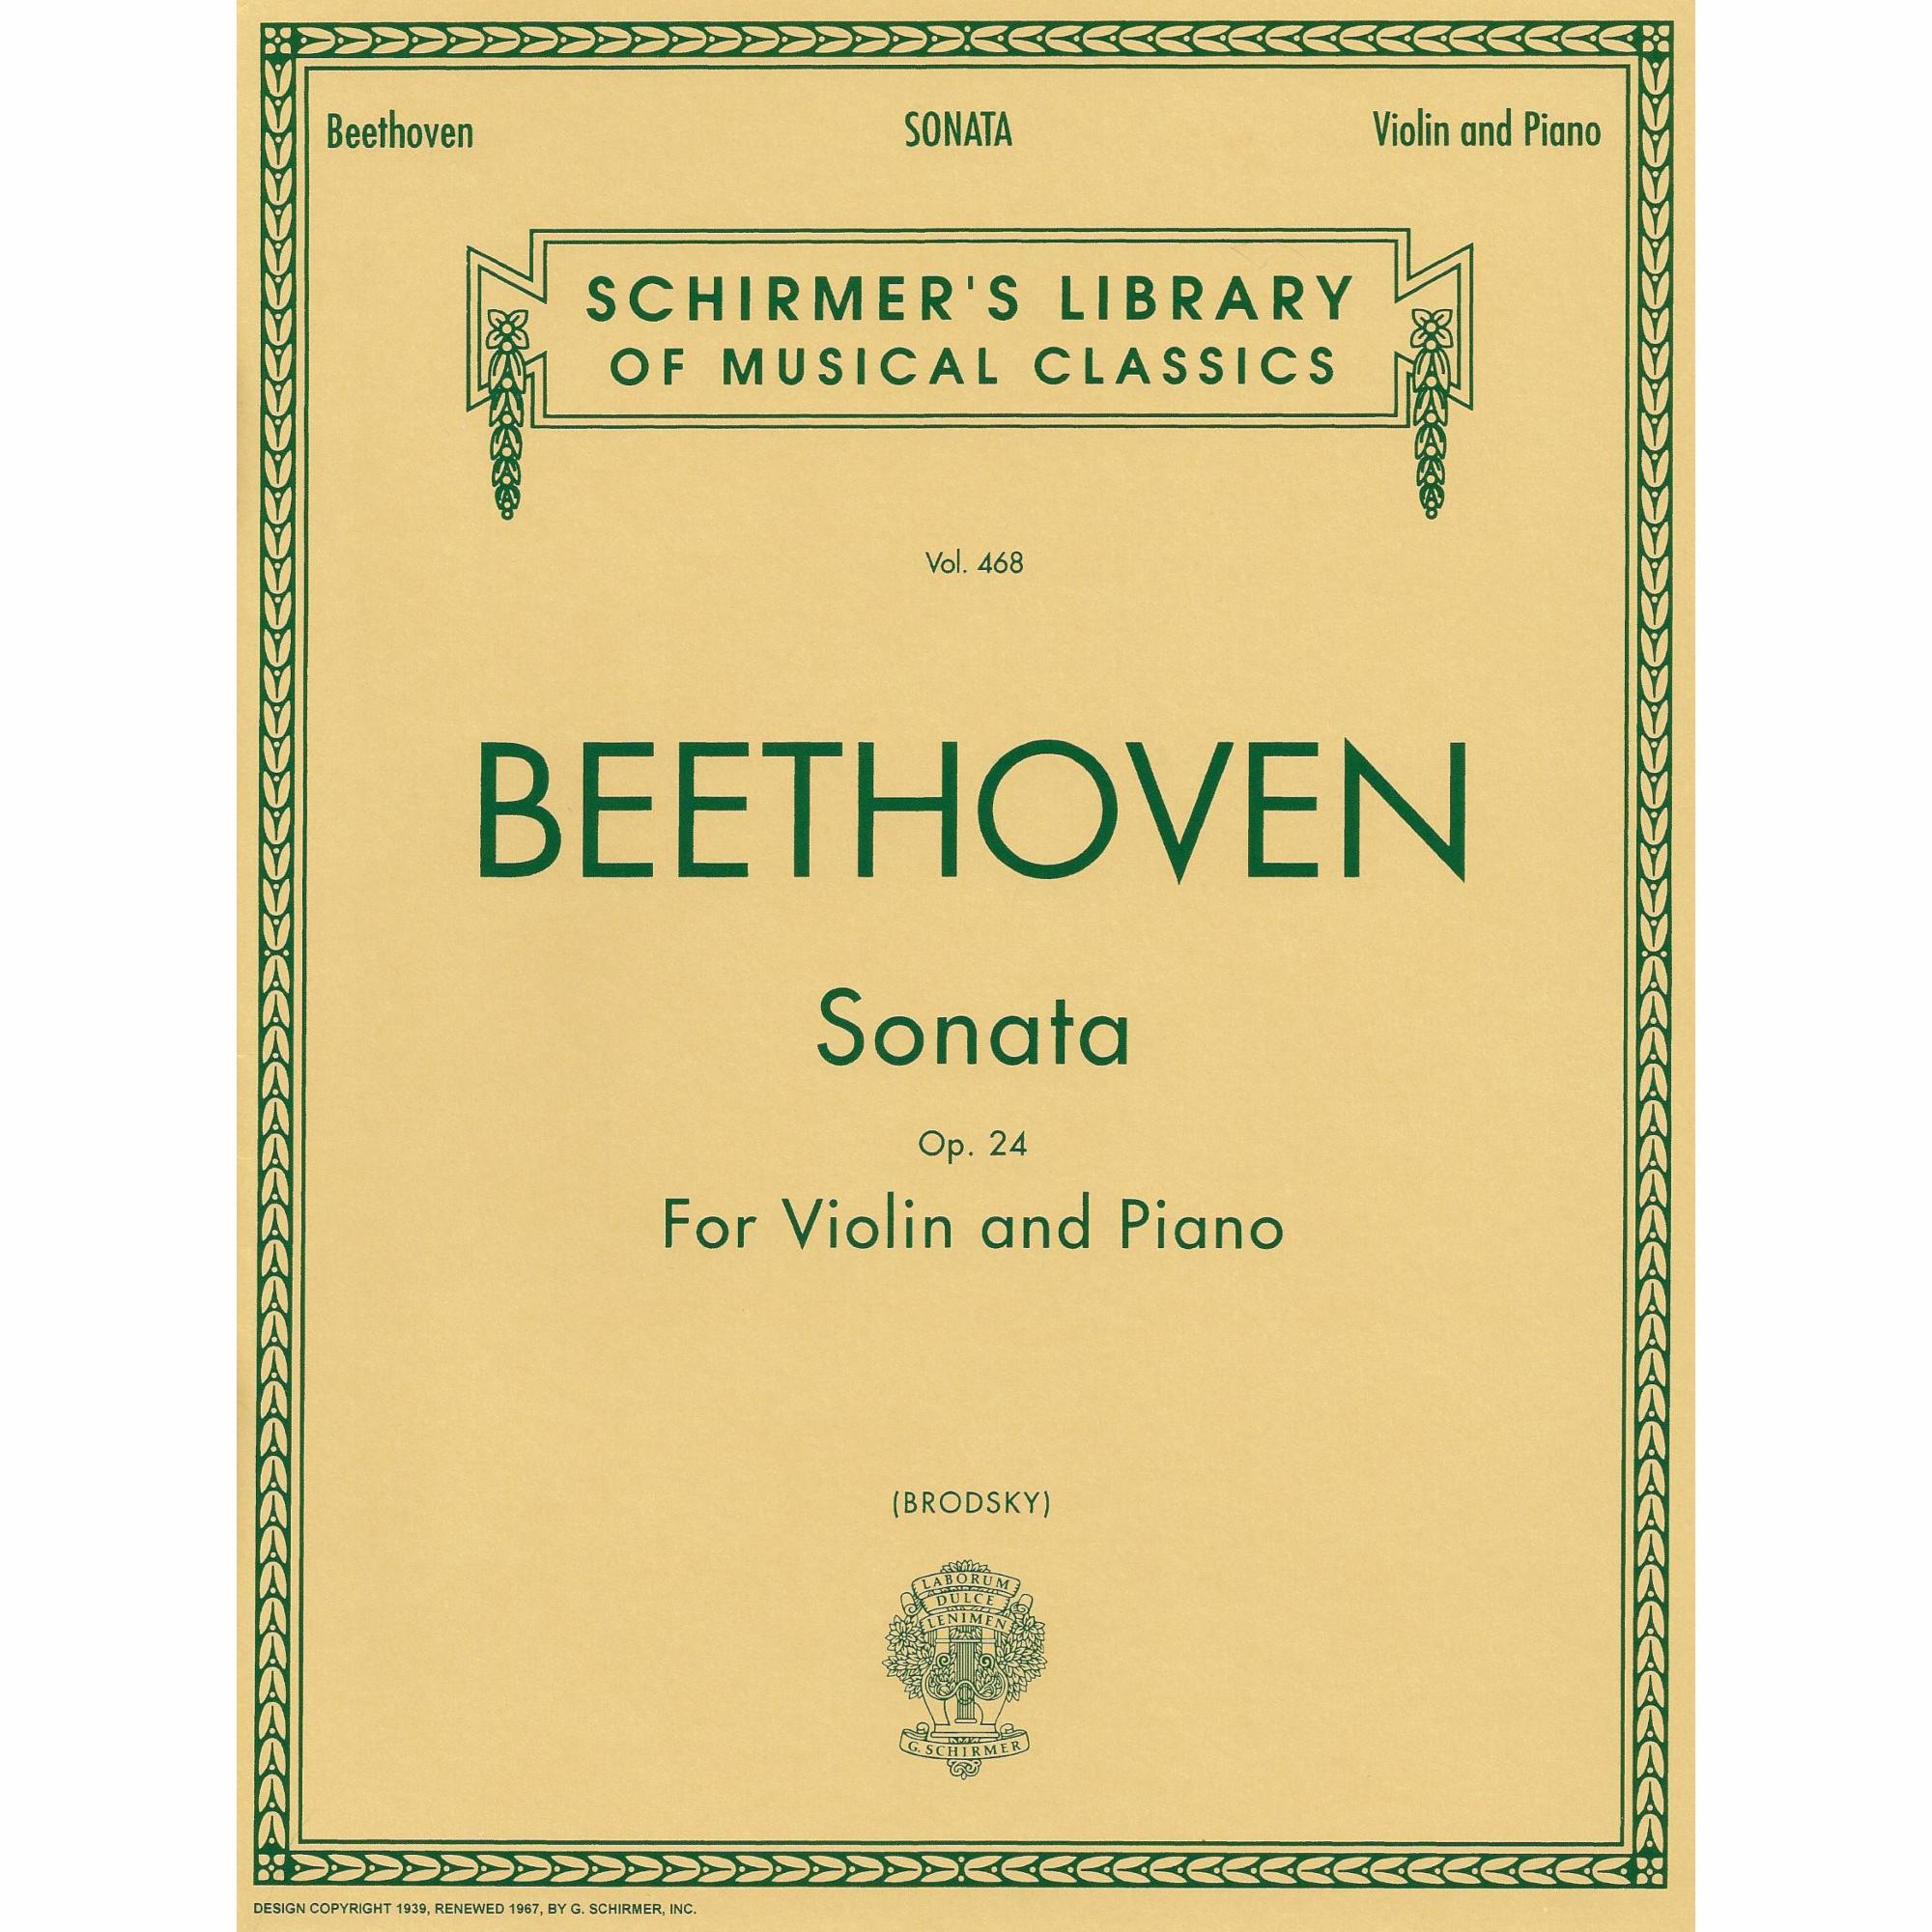 Beethoven -- Sonata, Op. 24 for Violin and Piano